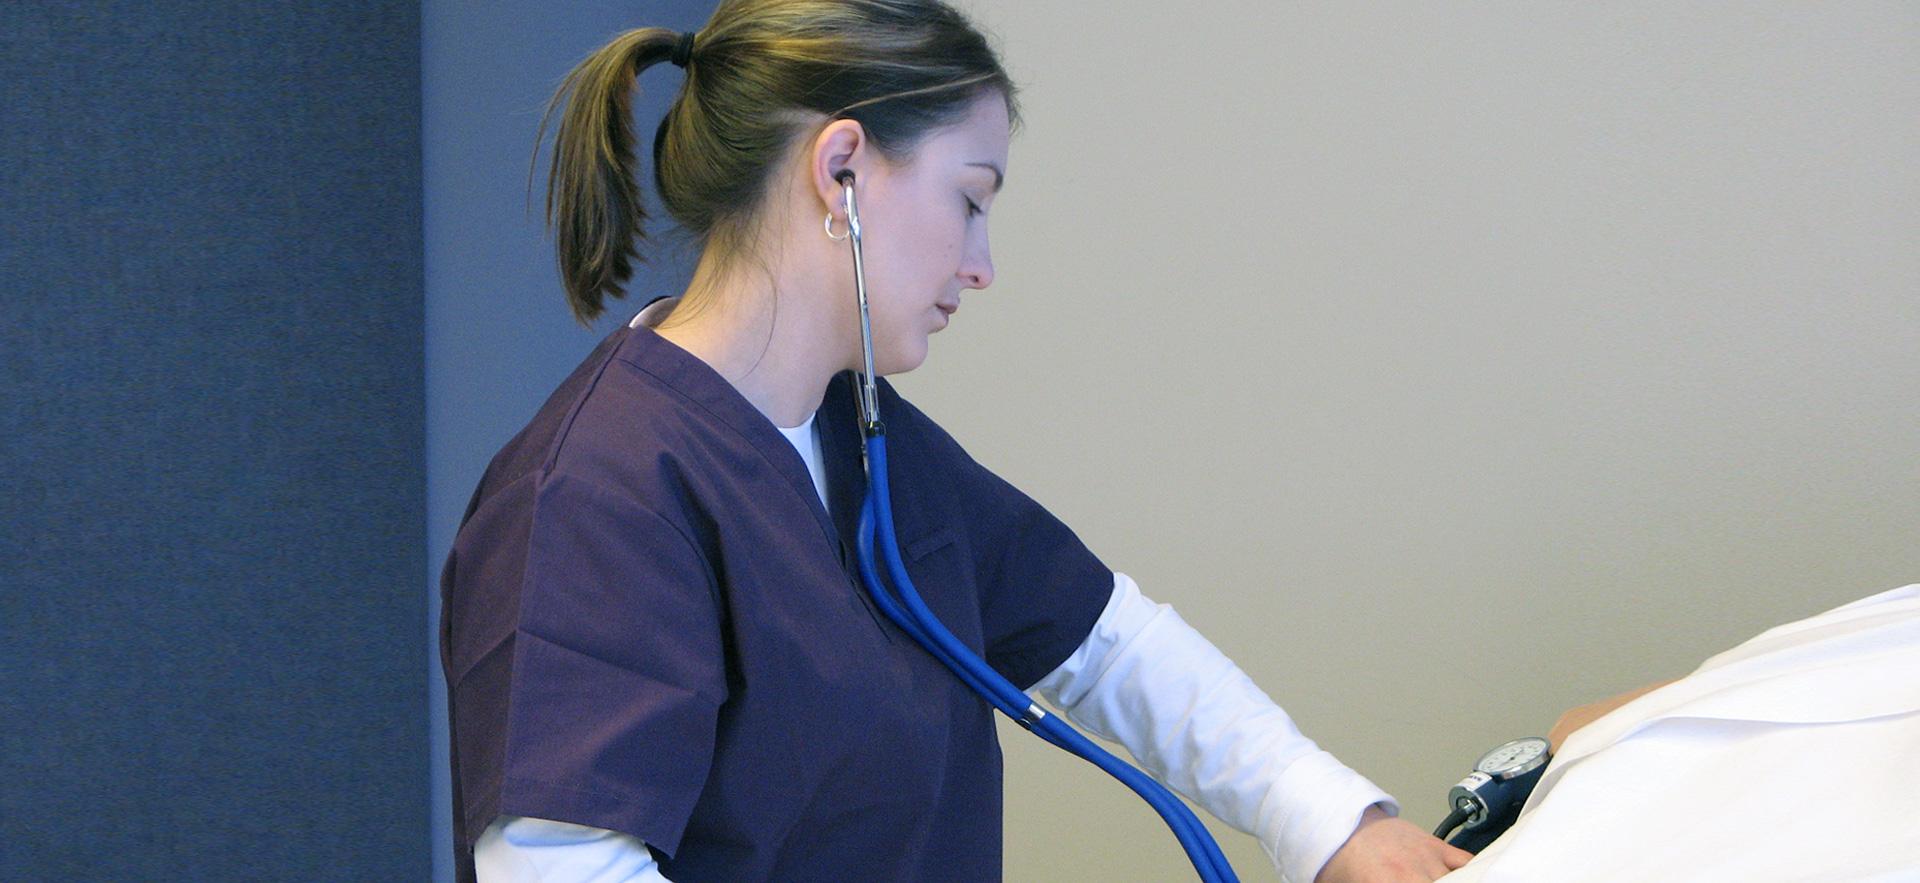 Female Practical Nursing student checking blood pressure.